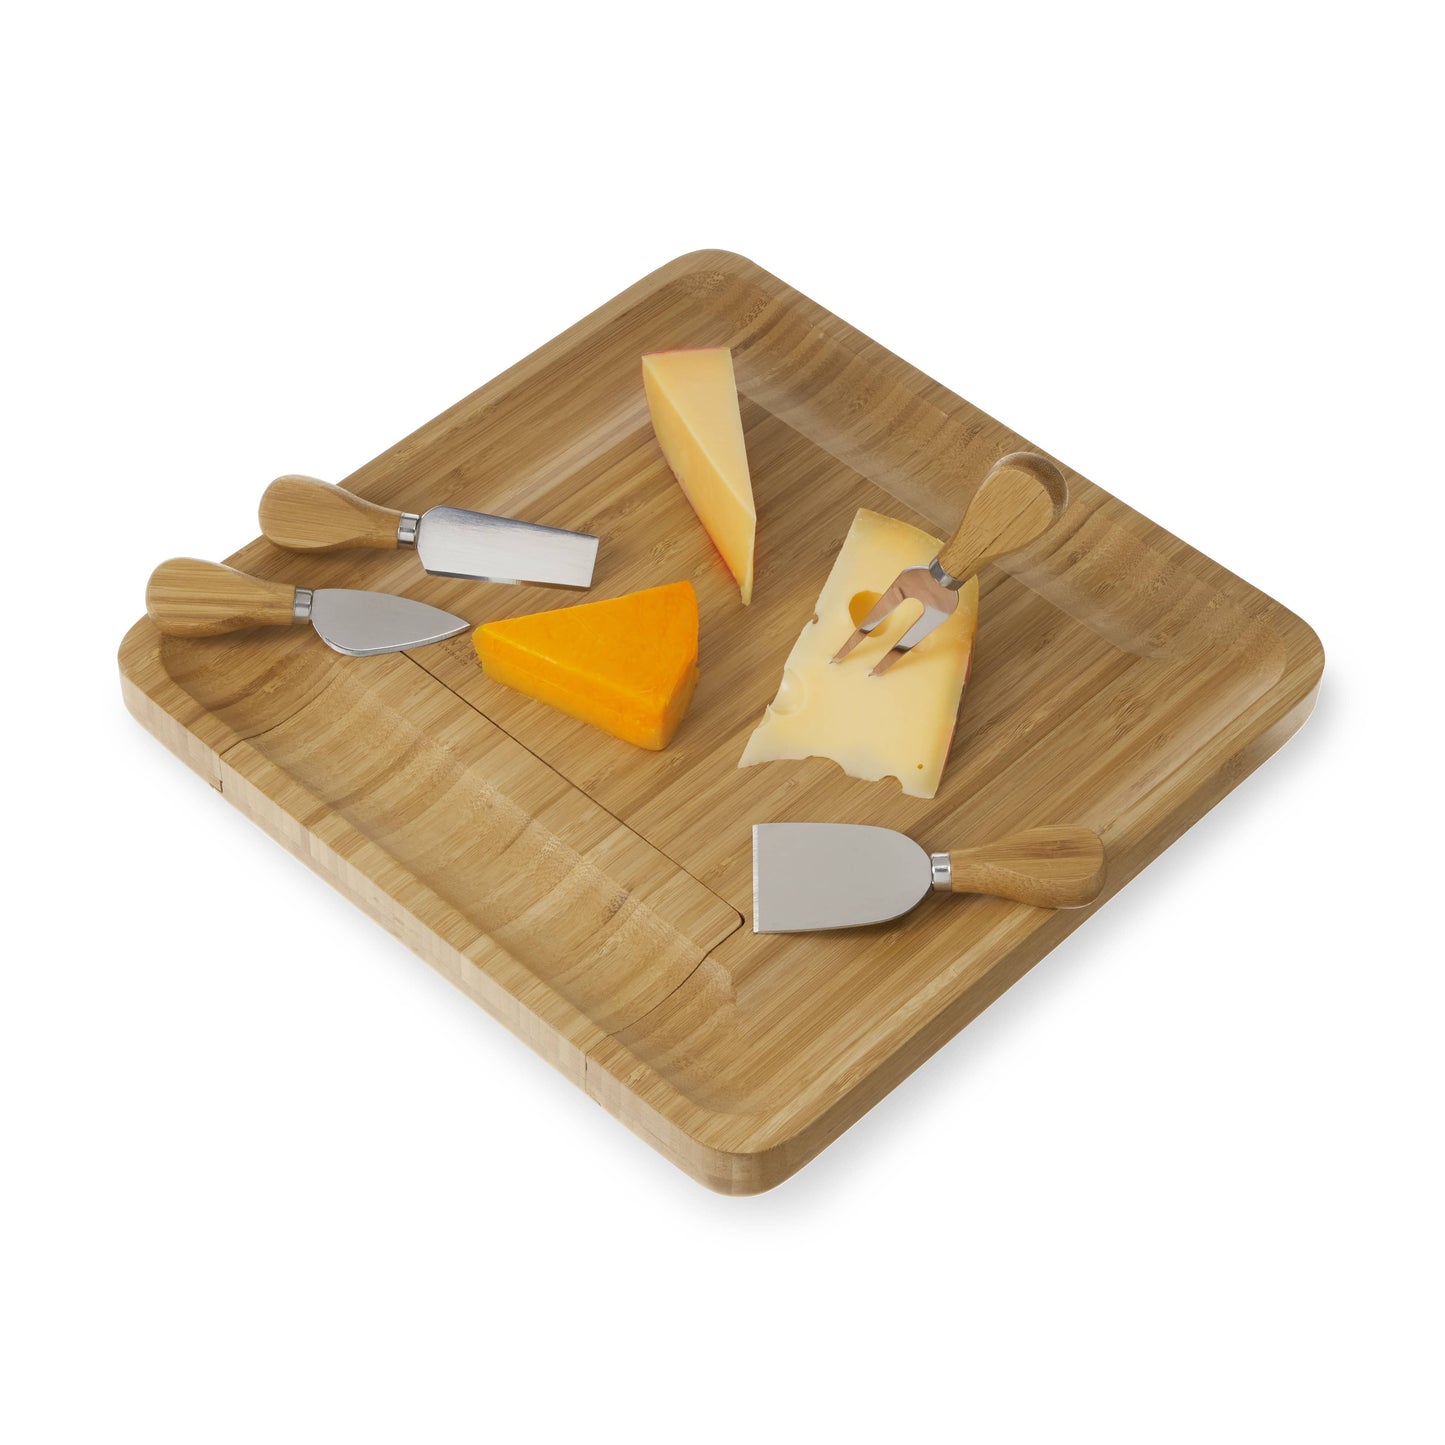 13" Bamboo Cheese Board & Knife Set w/ Storage- Set of 5